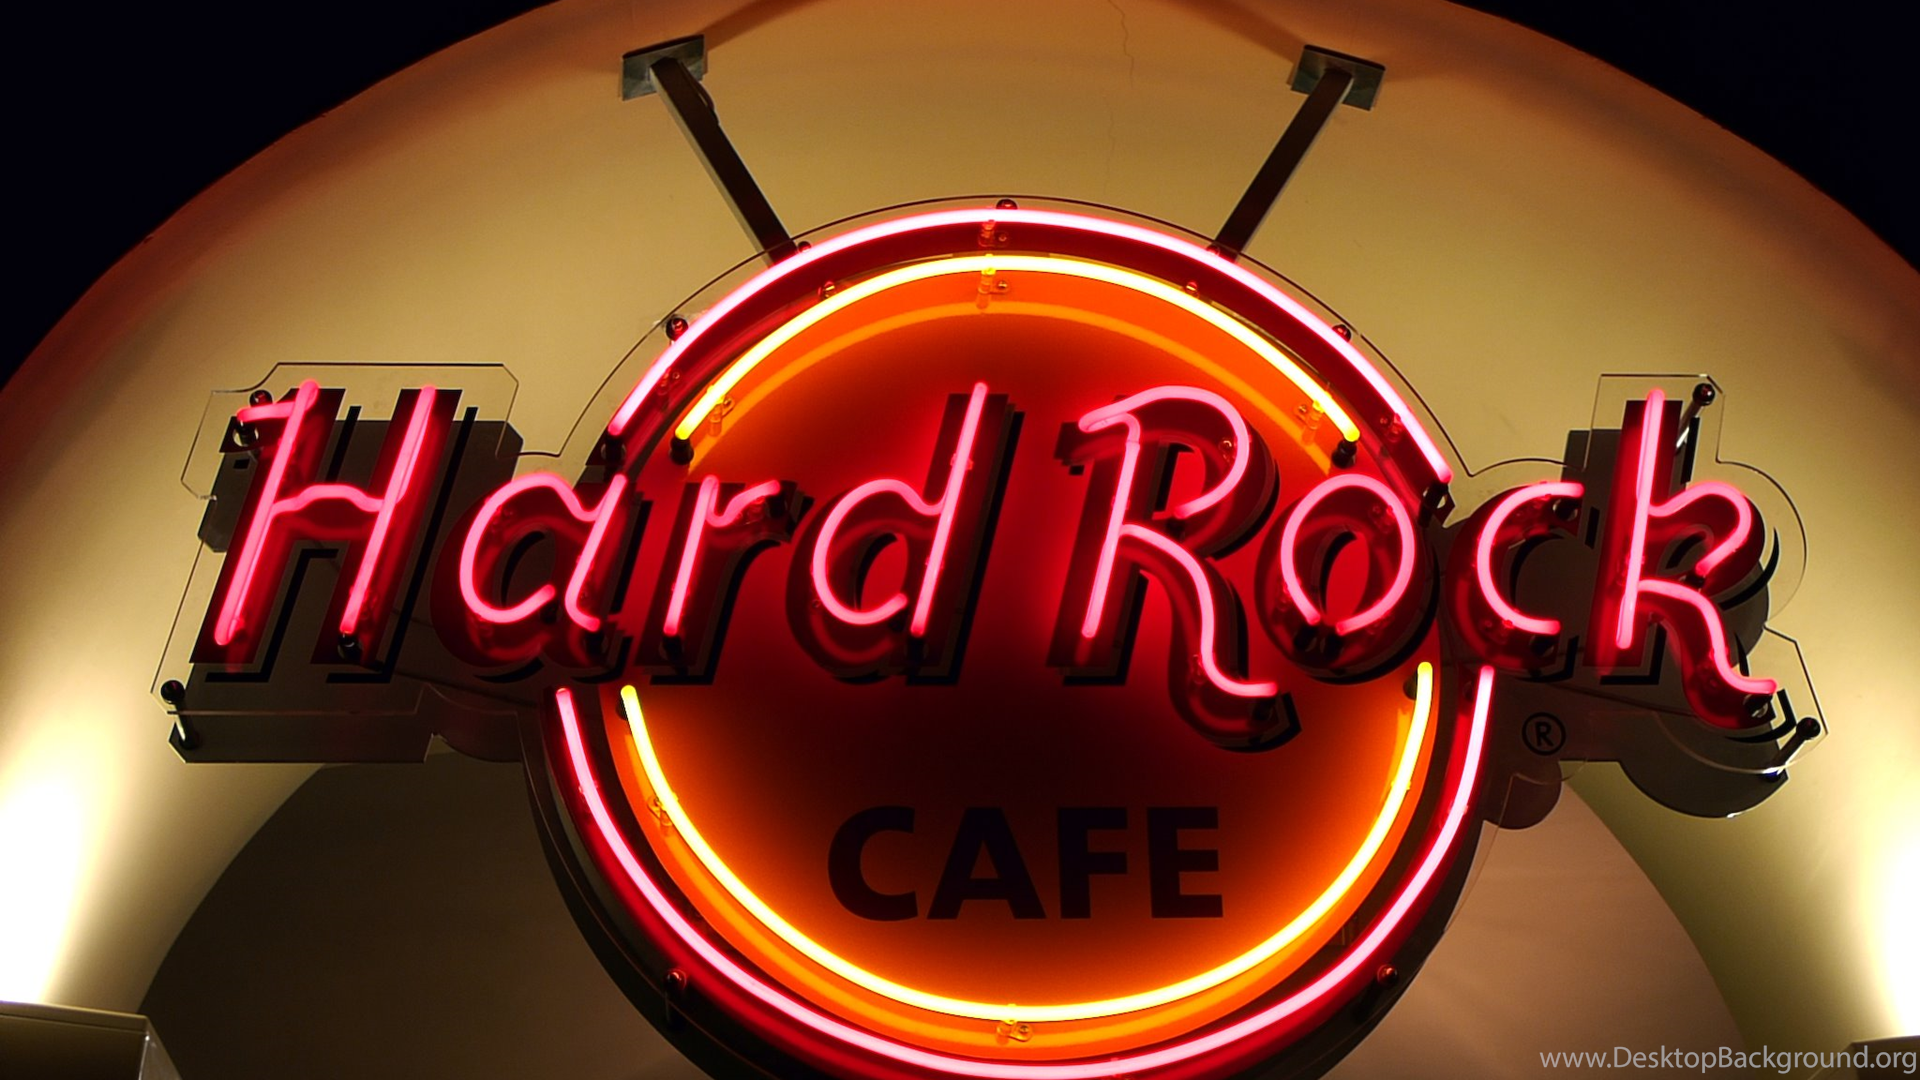 Hard file. Рок кафе. Hard Rock Cafe логотип. Логотип бара кафе круглый. Хард рок кафе неон в квартиру.